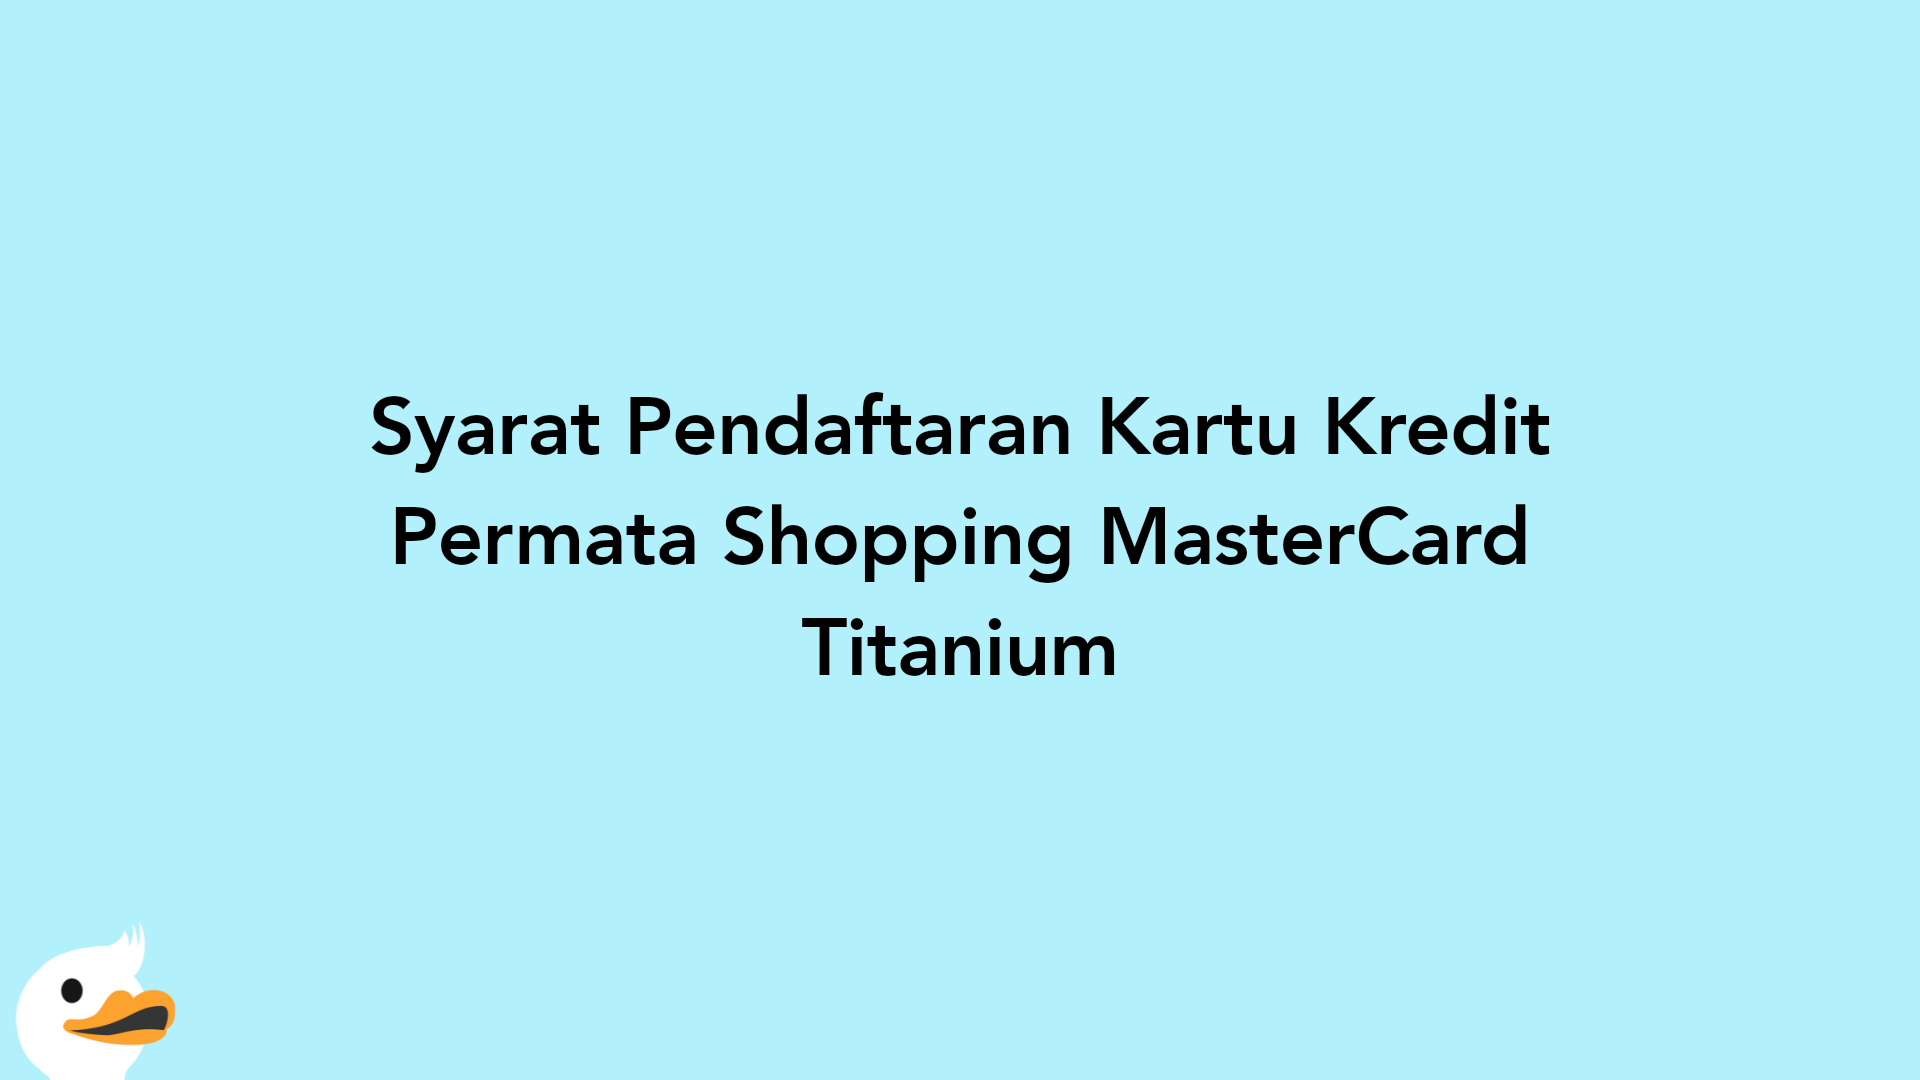 Syarat Pendaftaran Kartu Kredit Permata Shopping MasterCard Titanium